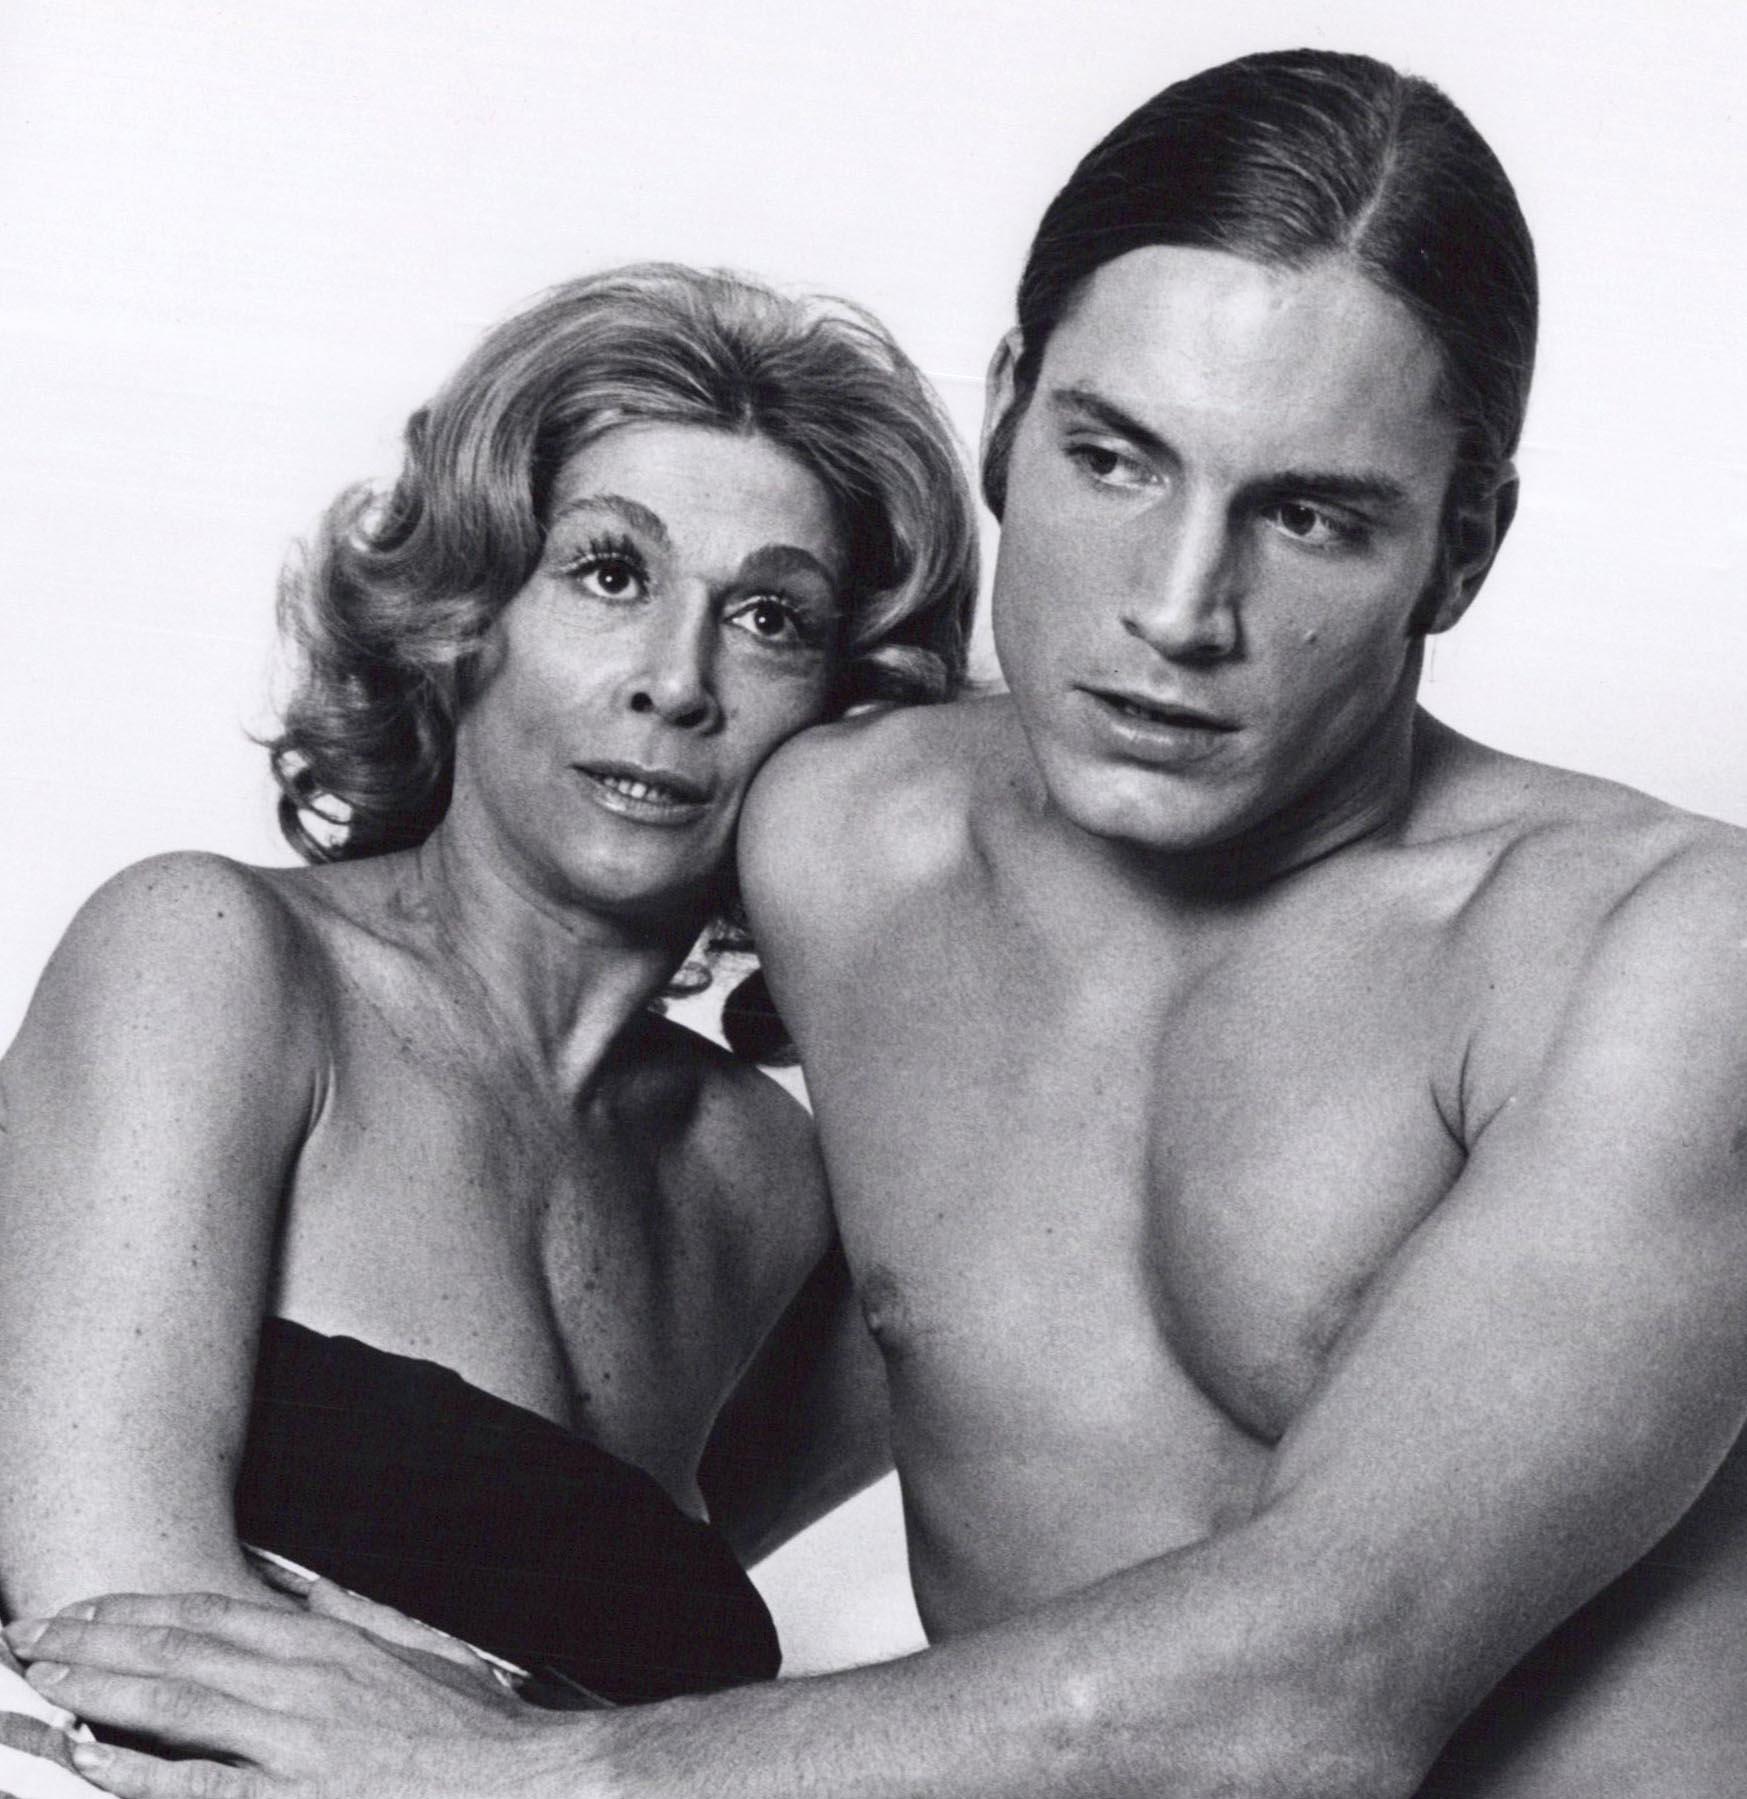 Andy Warhol - Les superstars de Joe Dallesandro et Sylvia Miles dans « Heat » - Photograph de Jack Mitchell